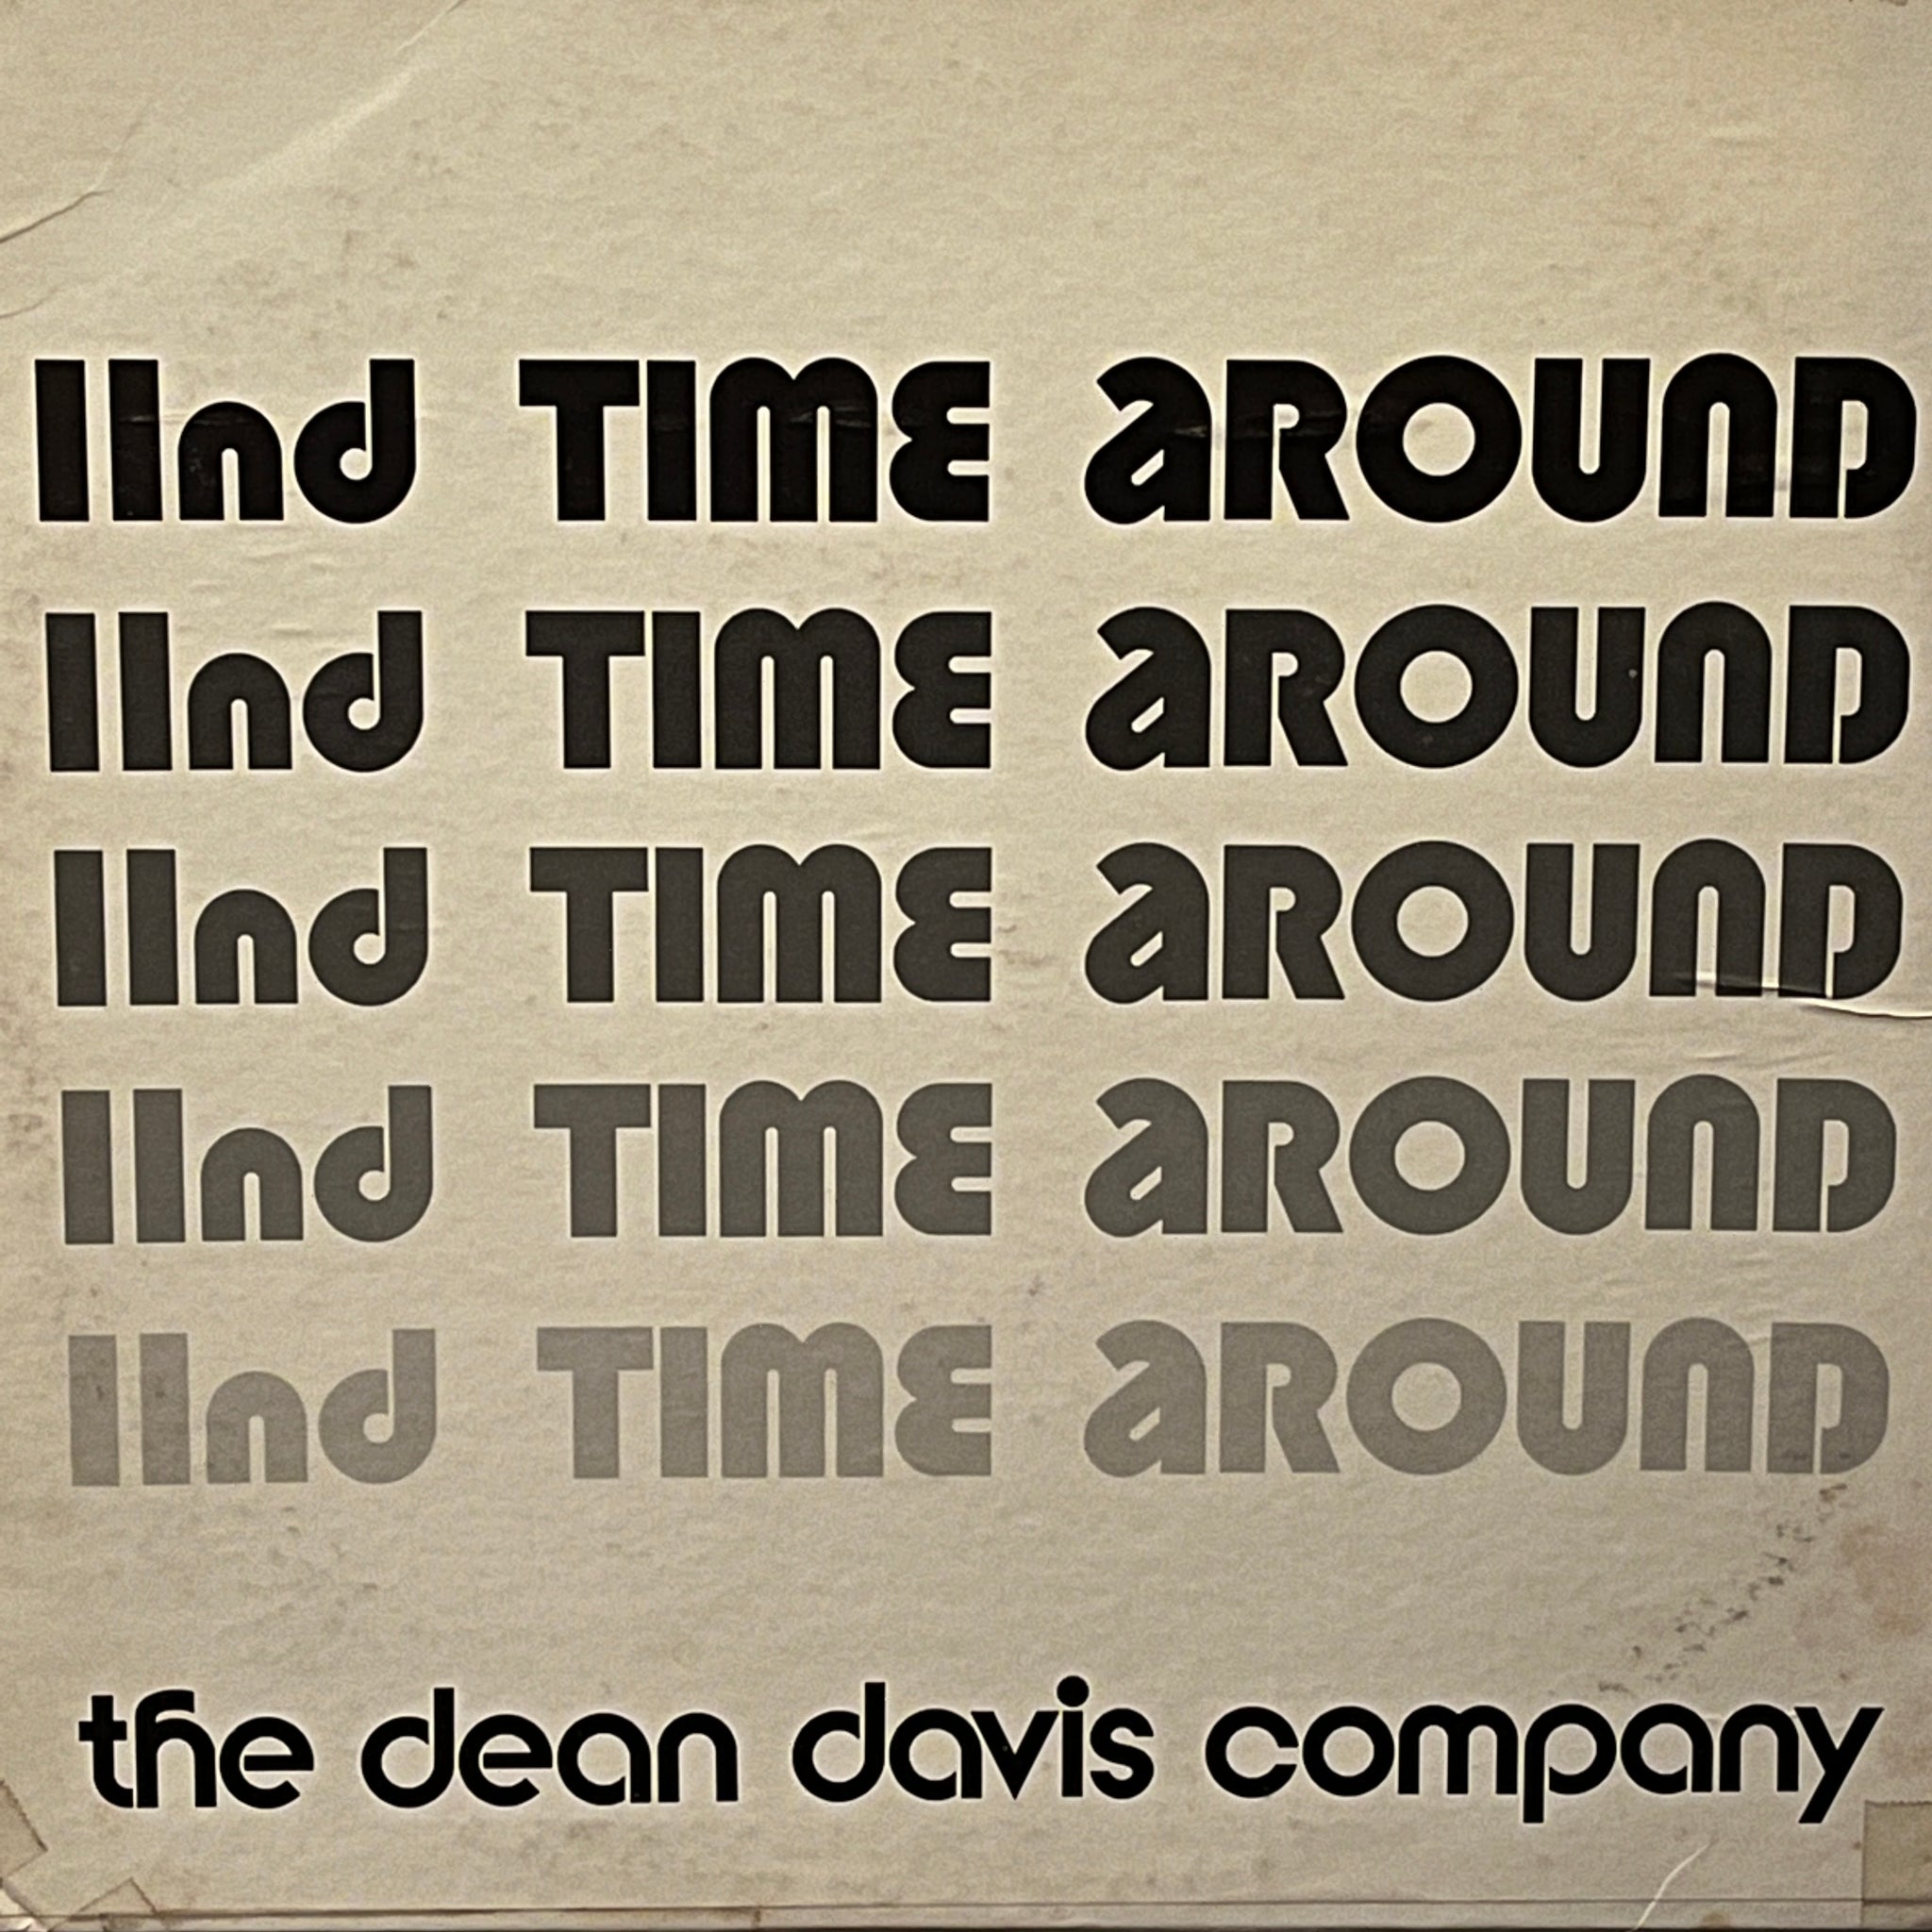 The Dean Davis Company – IInd Time Around